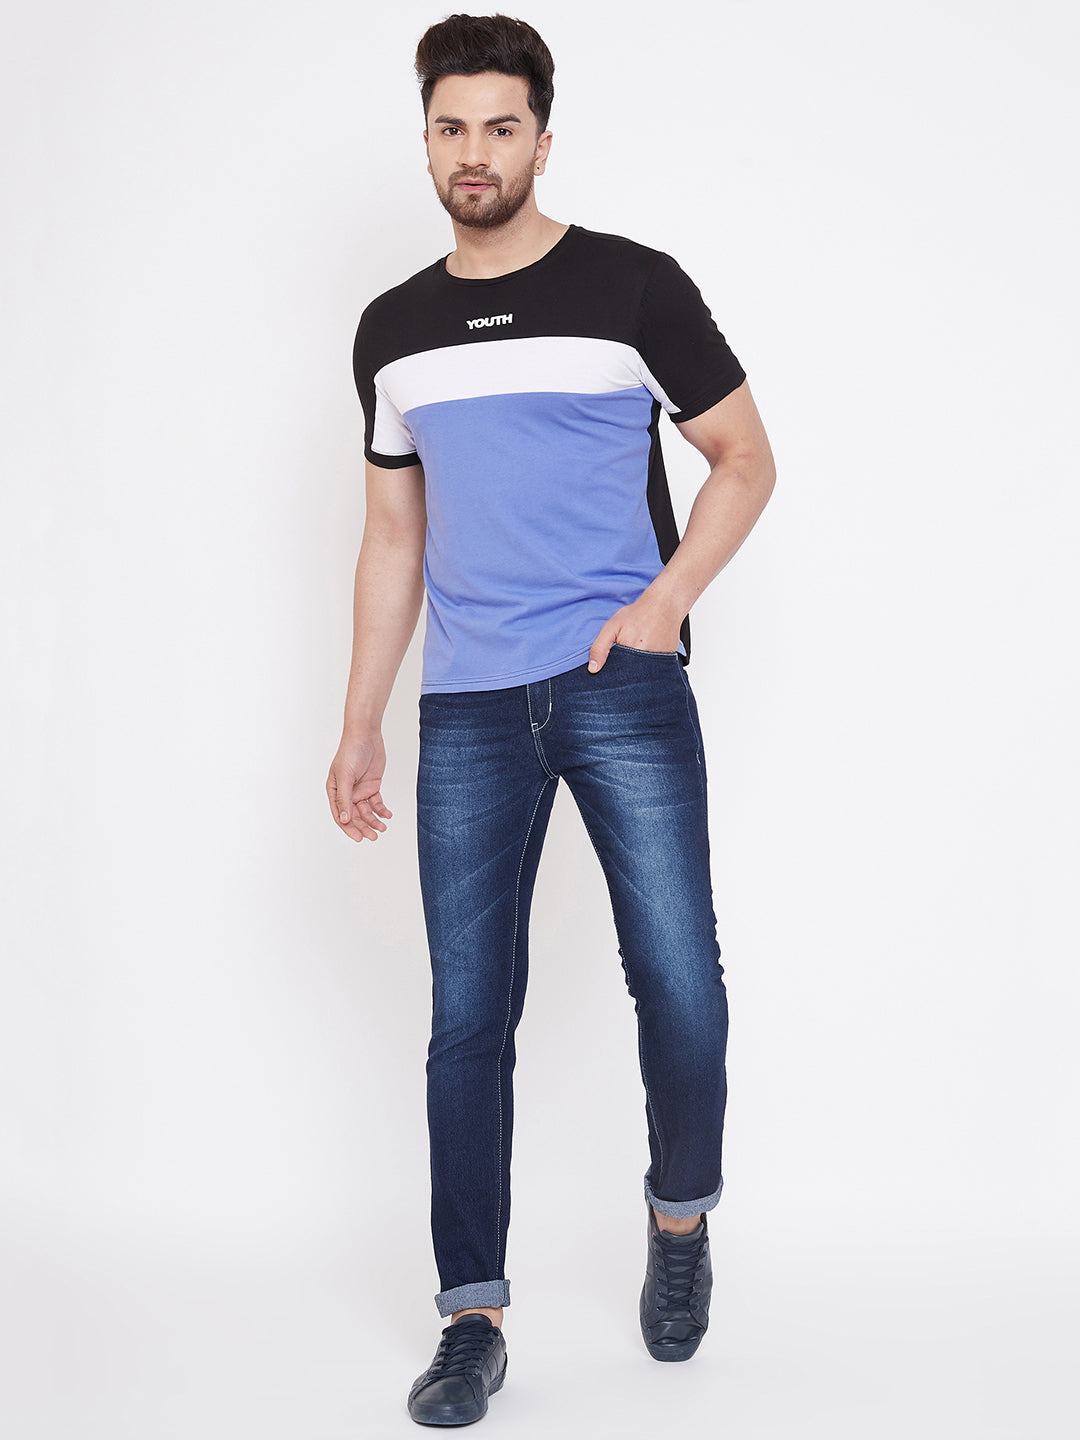 Black/White/Blue Printed Men's Half Sleeves Round Neck T-Shirt